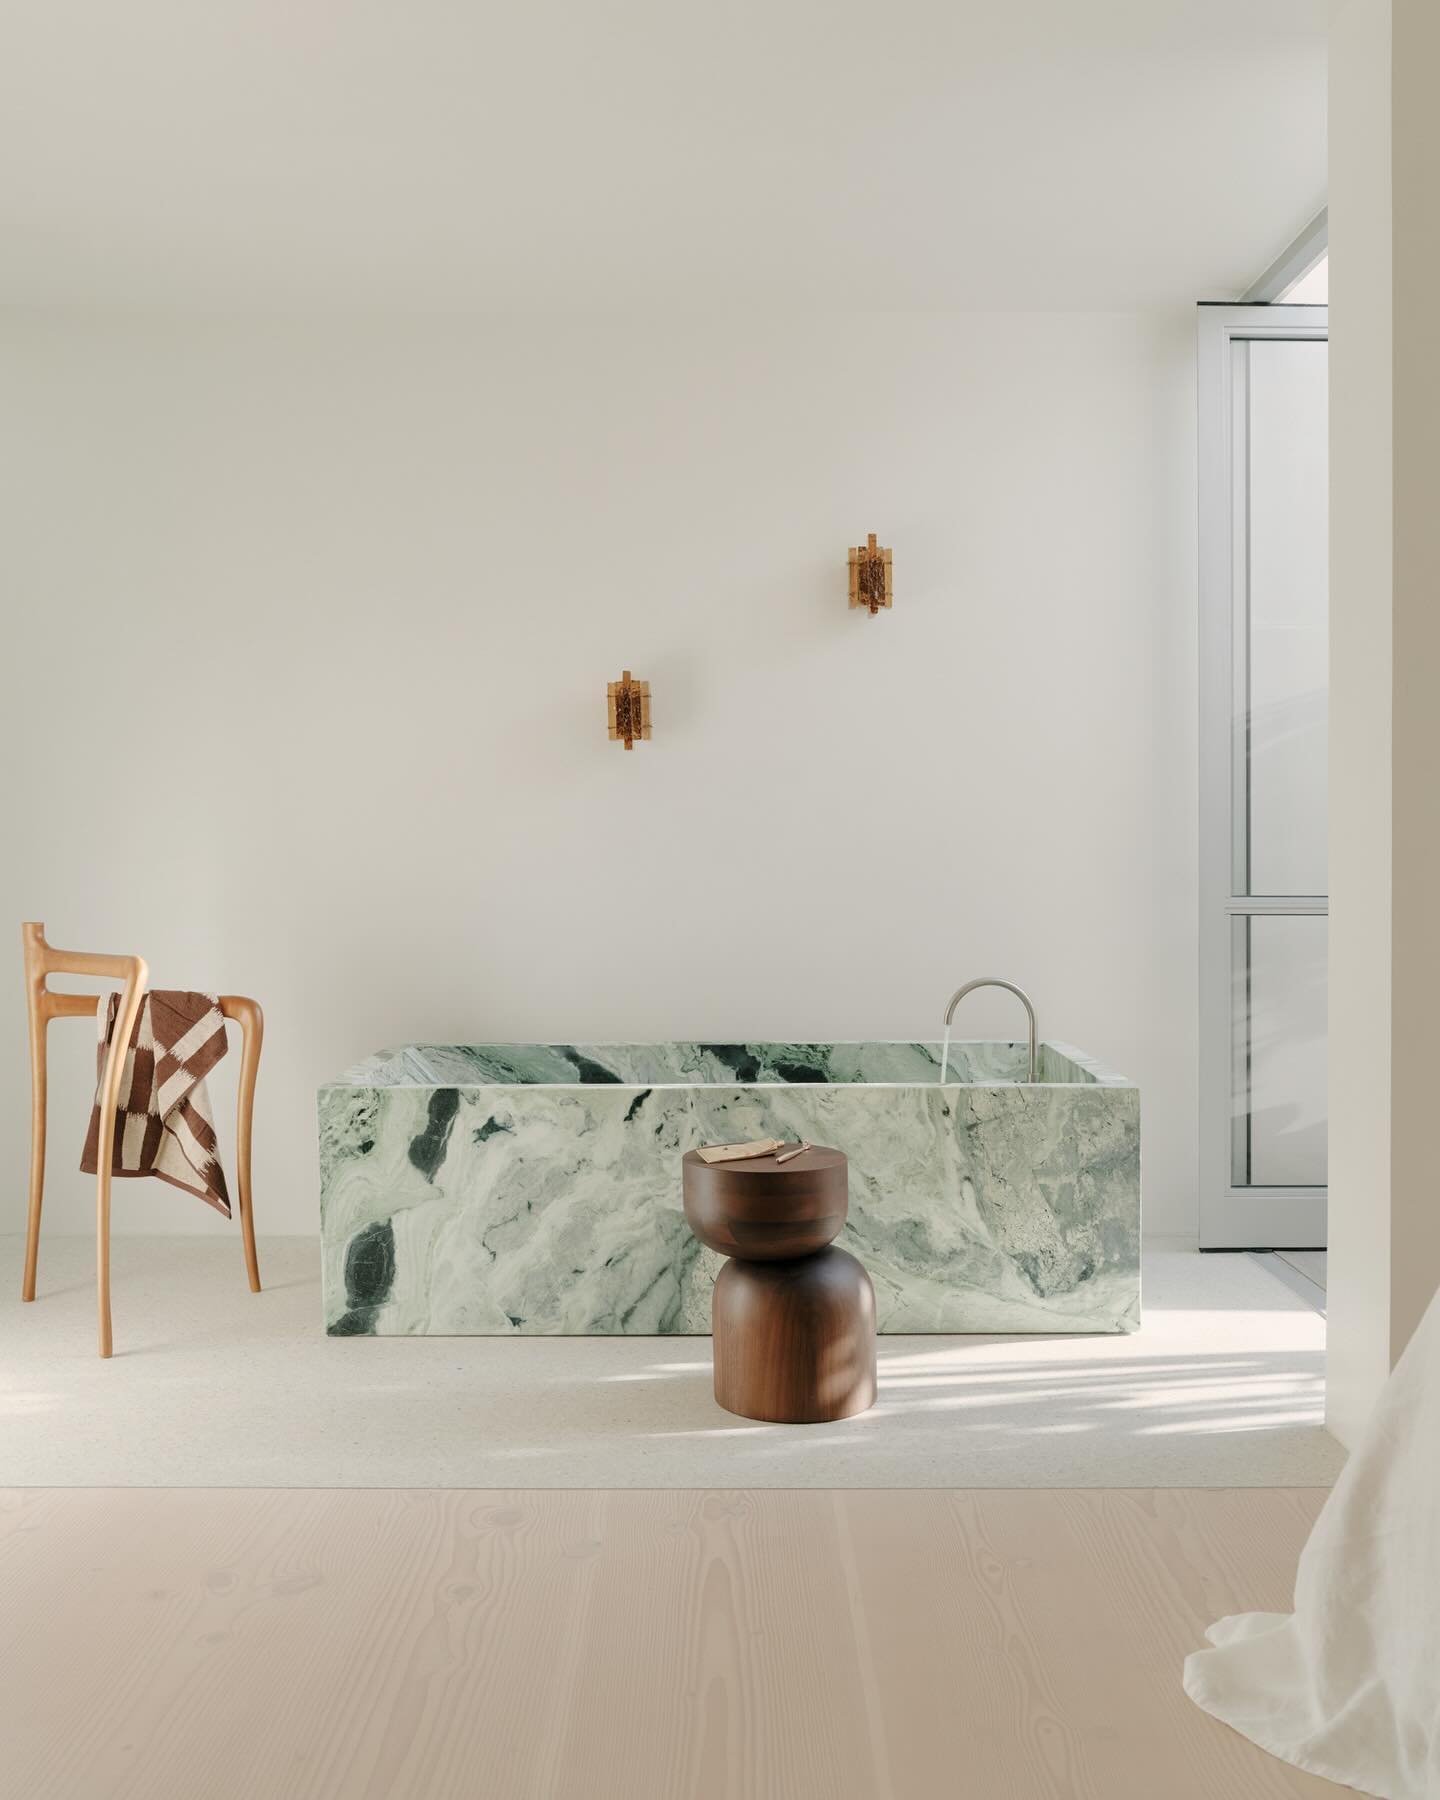 A ode to green 🌱🌿 

Desing by @_patternstudio | #himeraestudio #marbledesign #minimalhouse #minimalaesthetic #serenebeauty #interiordesigninspiration #homedecor #homerenovationideas